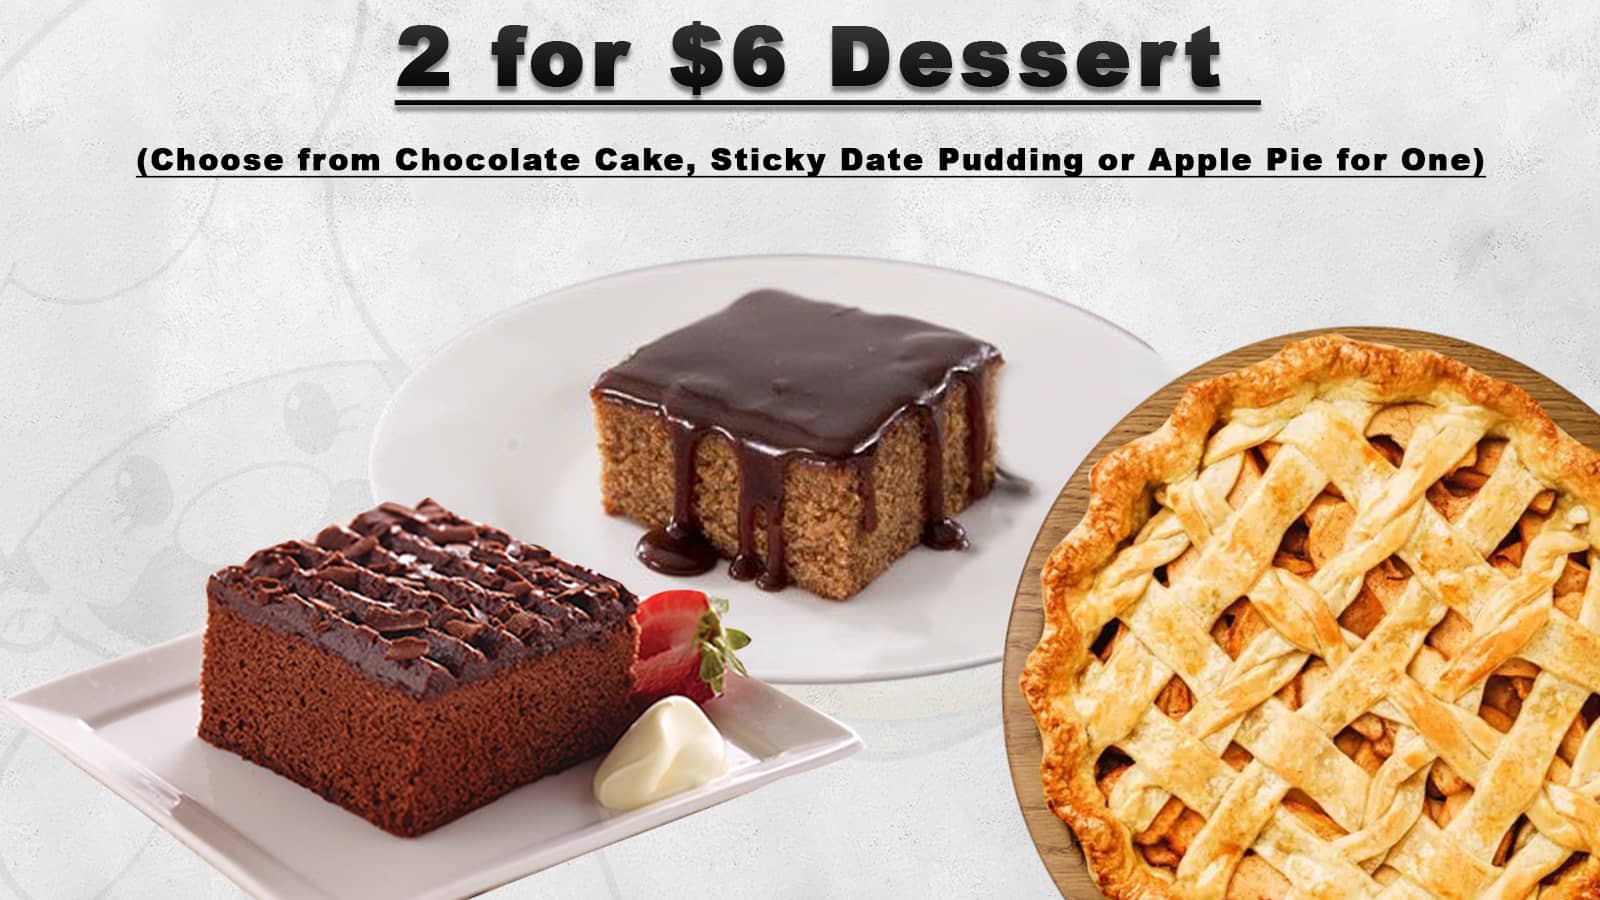 Chocalte cake + Stickey Date Pudding